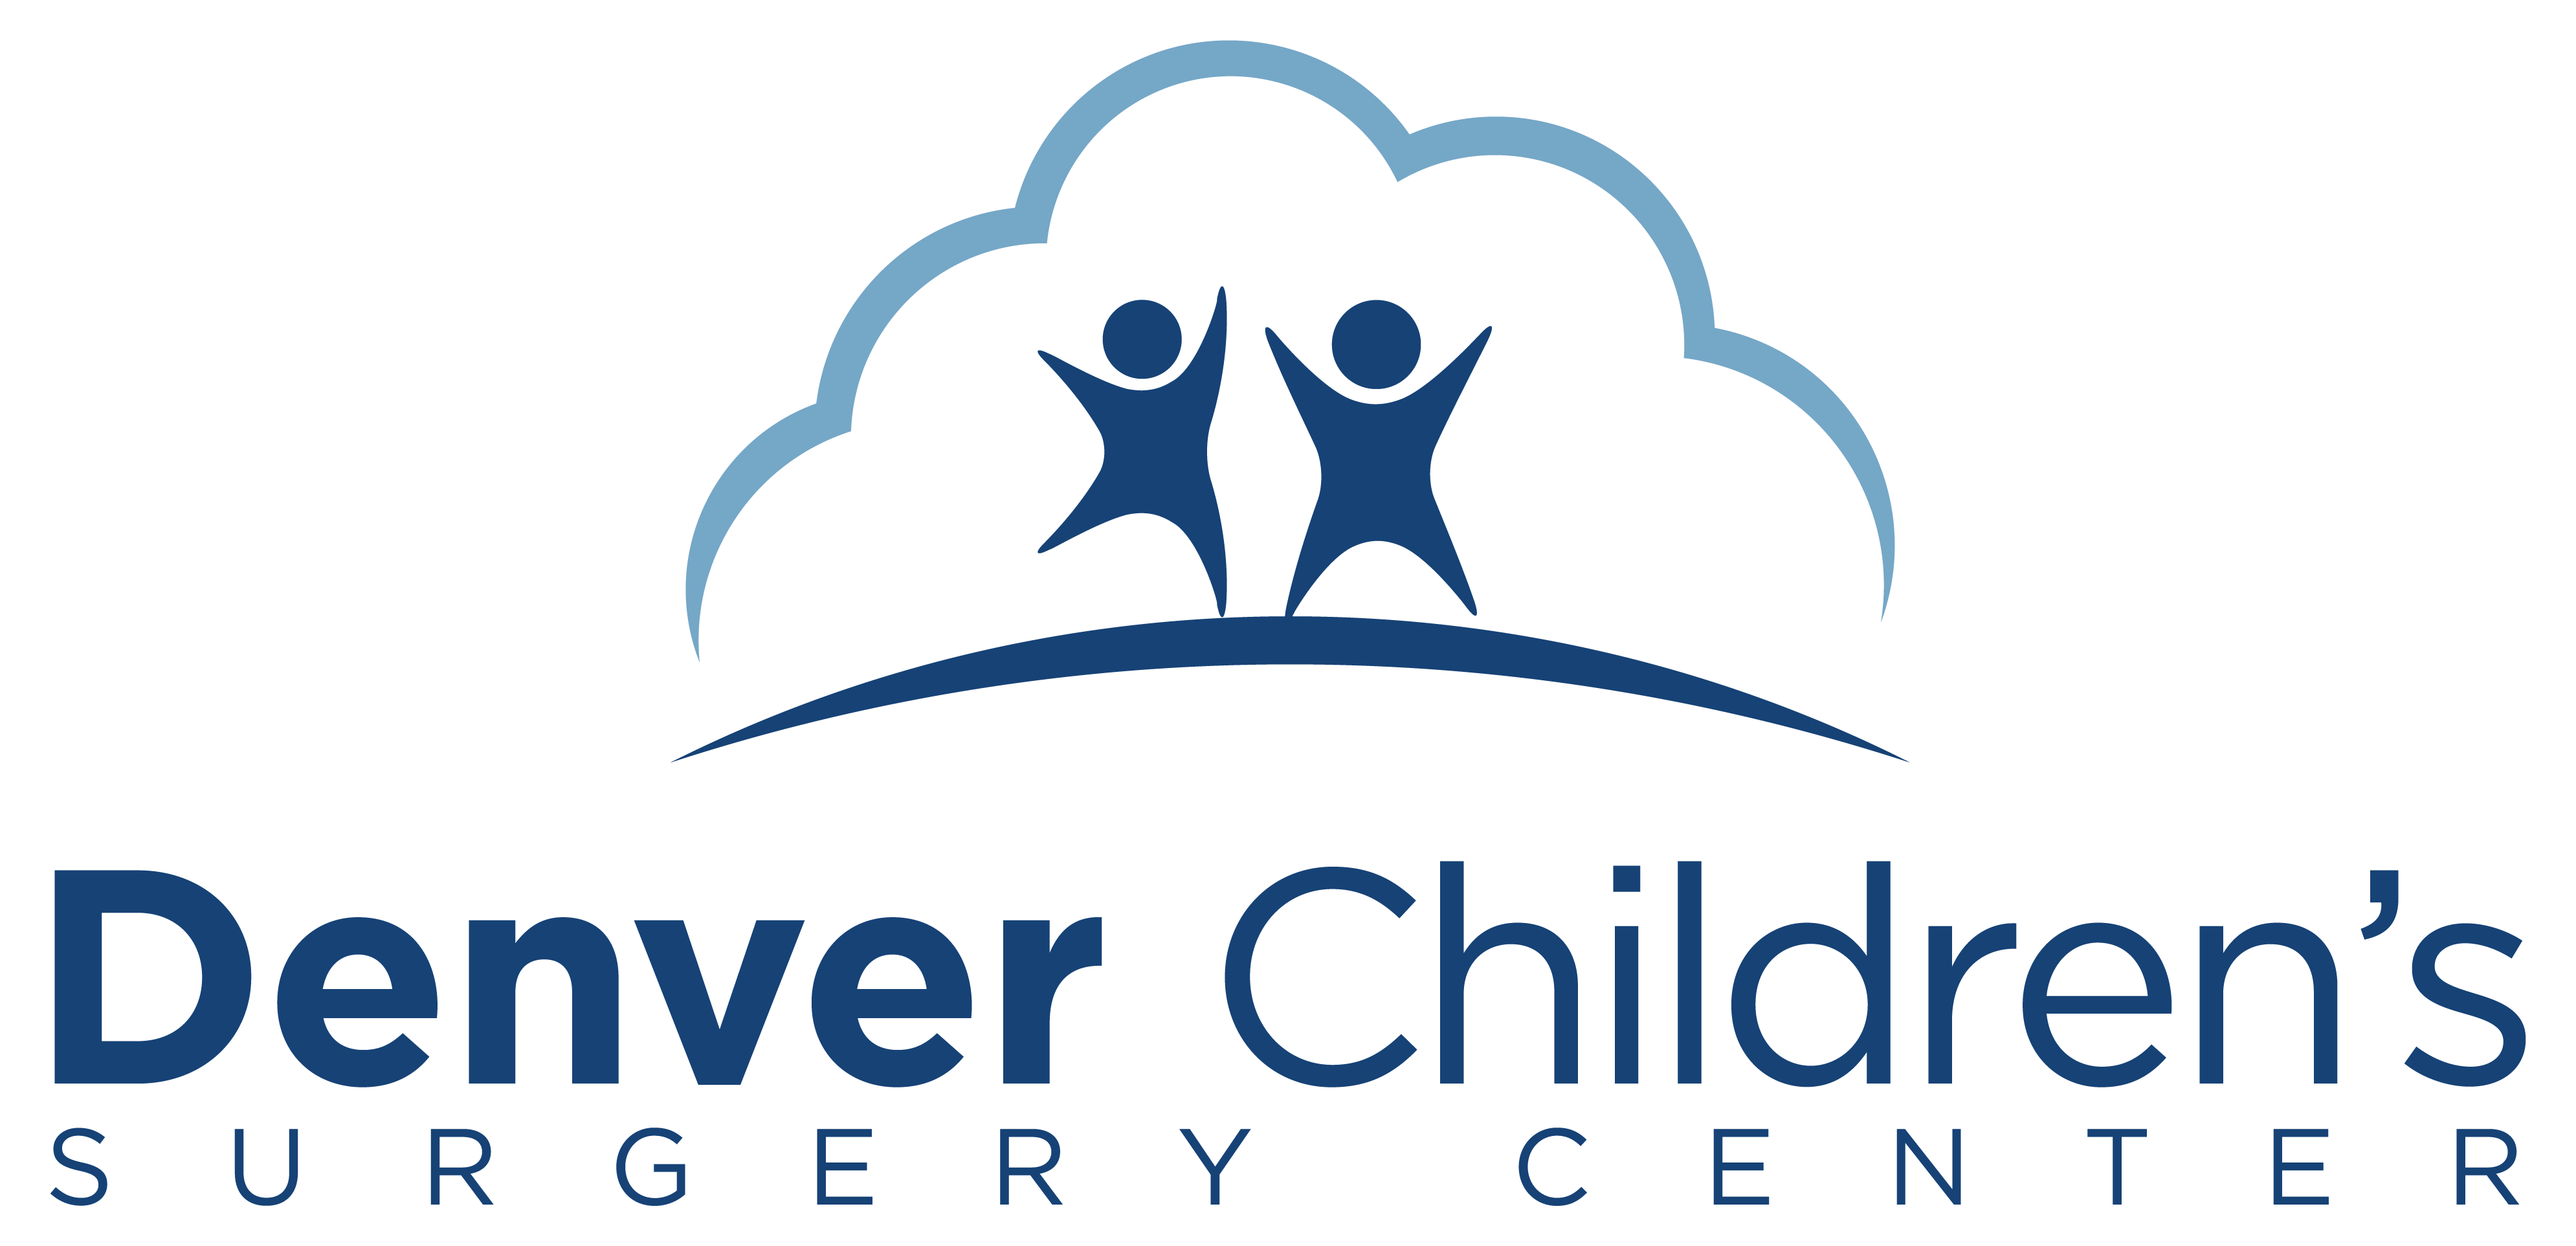 Denver Children's Surgery Center